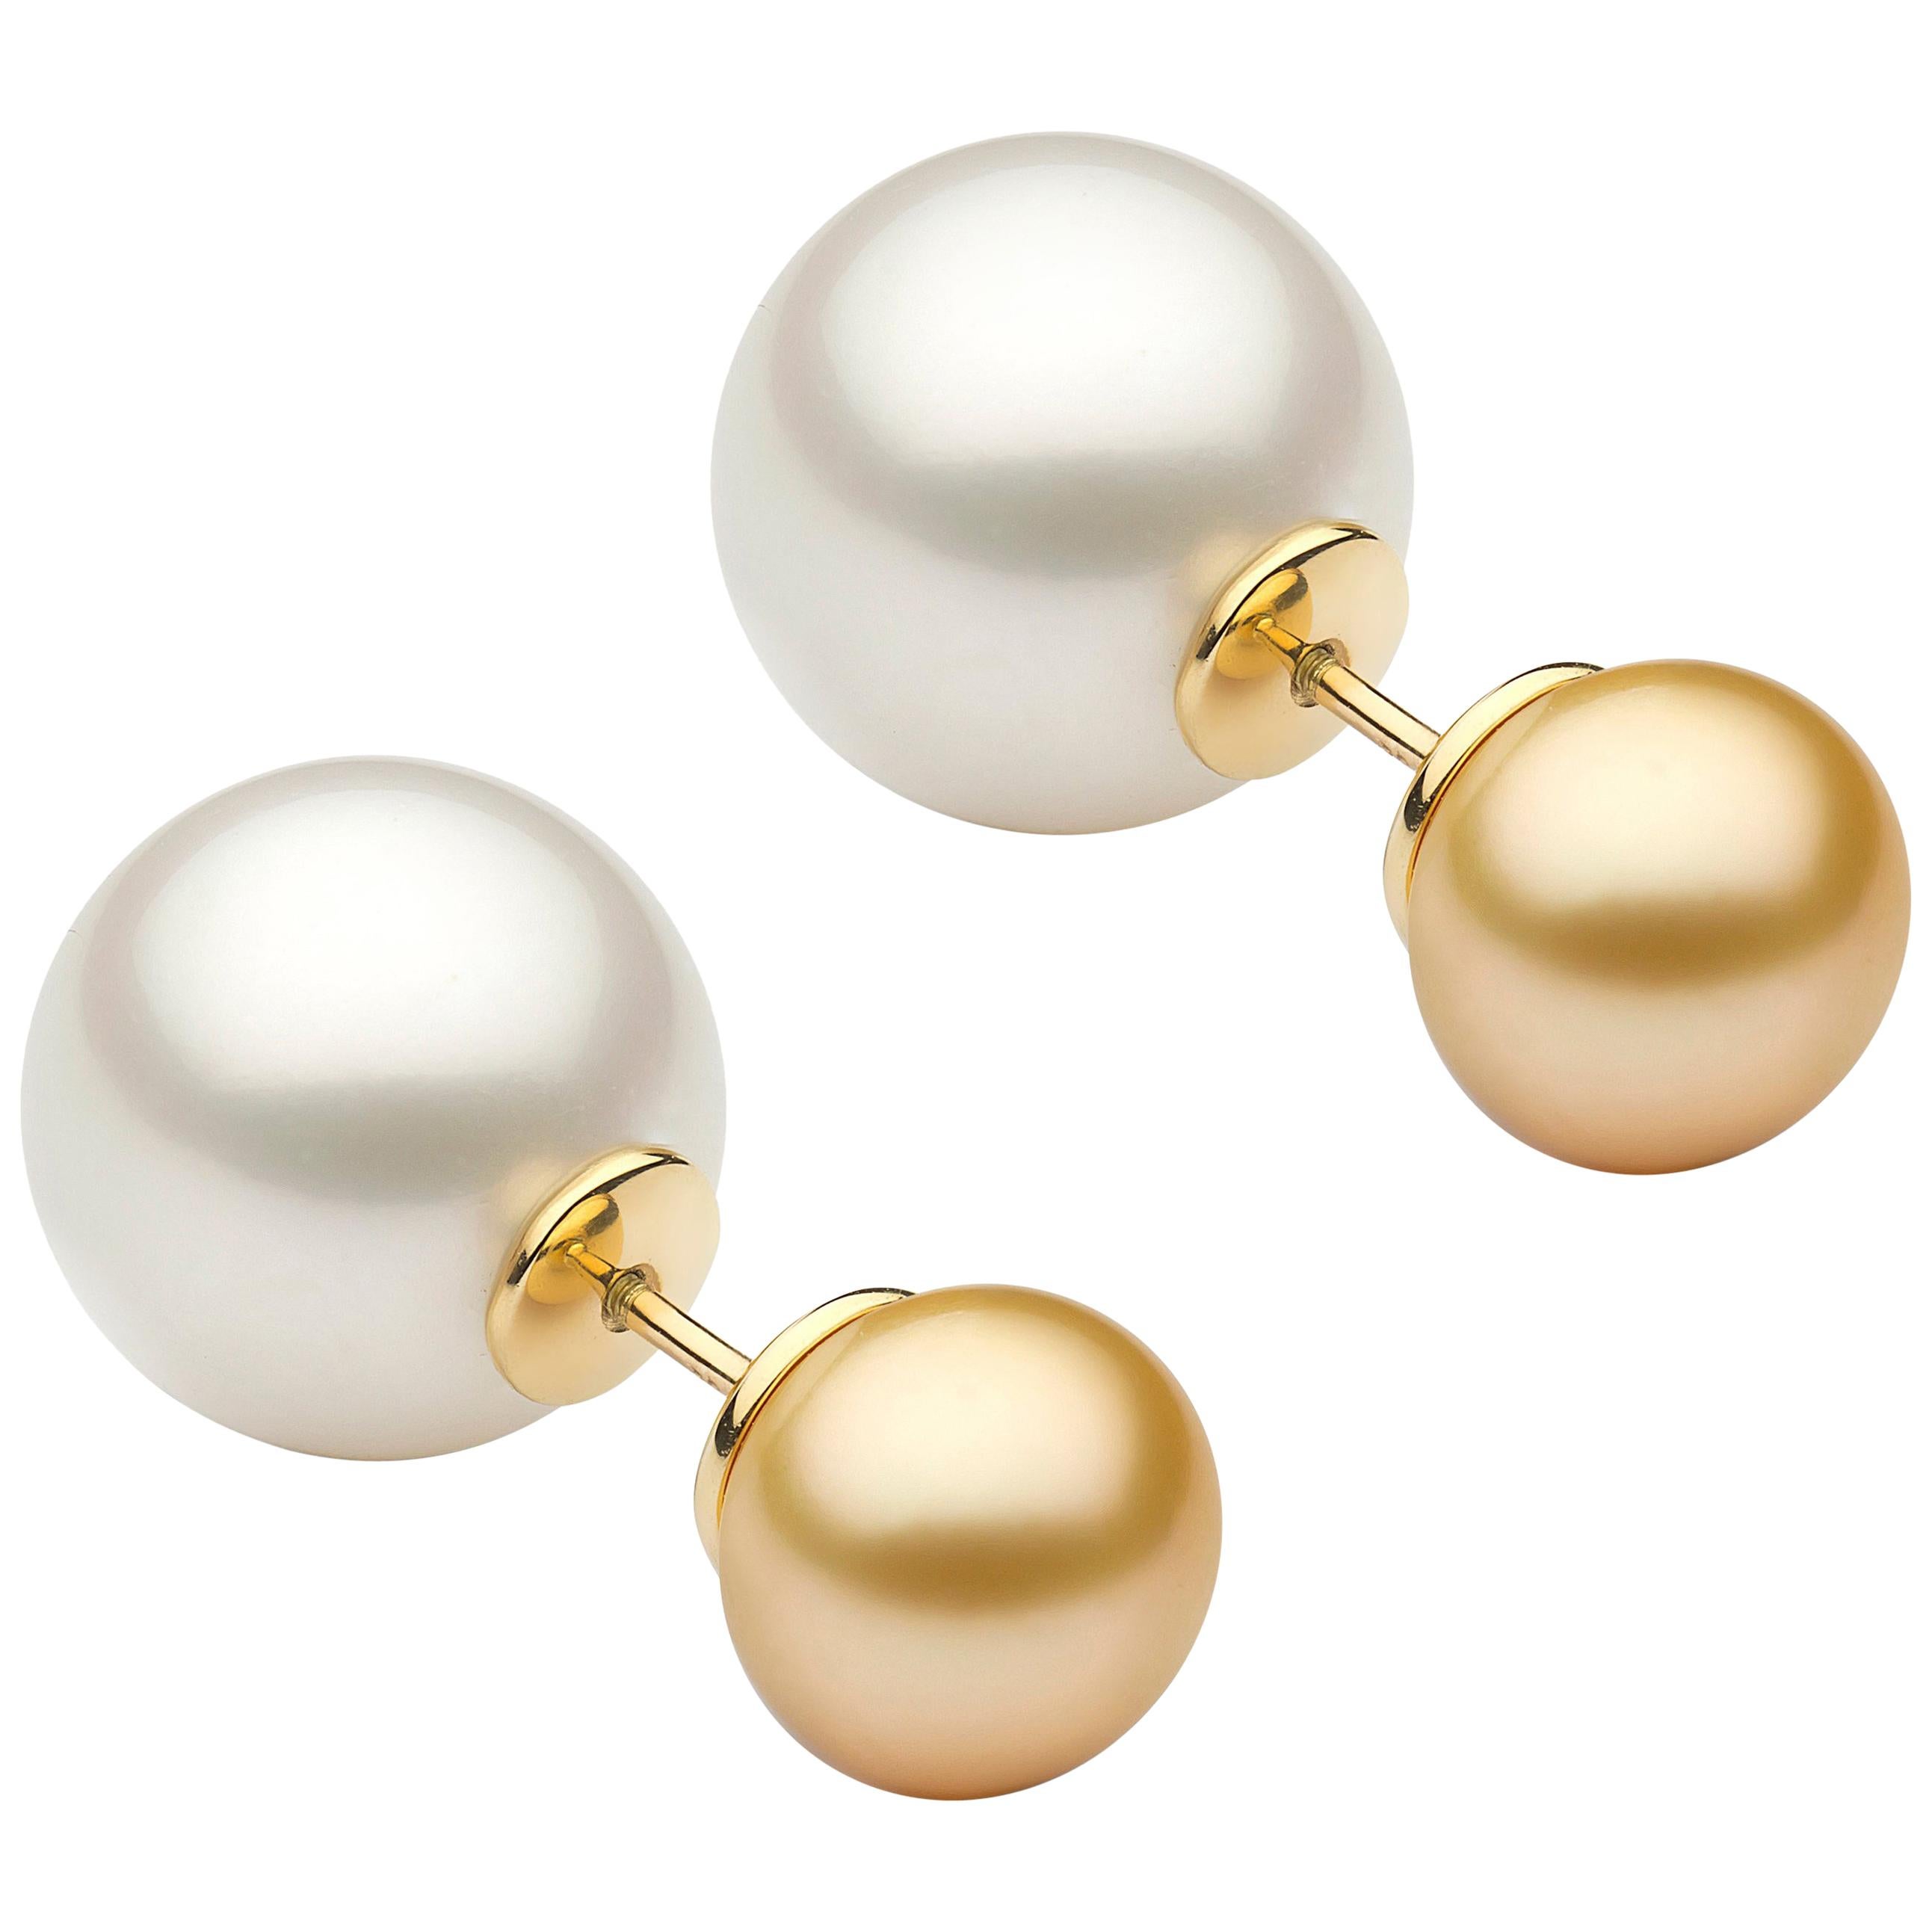 Yoko London White and Golden South Sea Duet Earrings Set in 18 Karat Yellow Gold